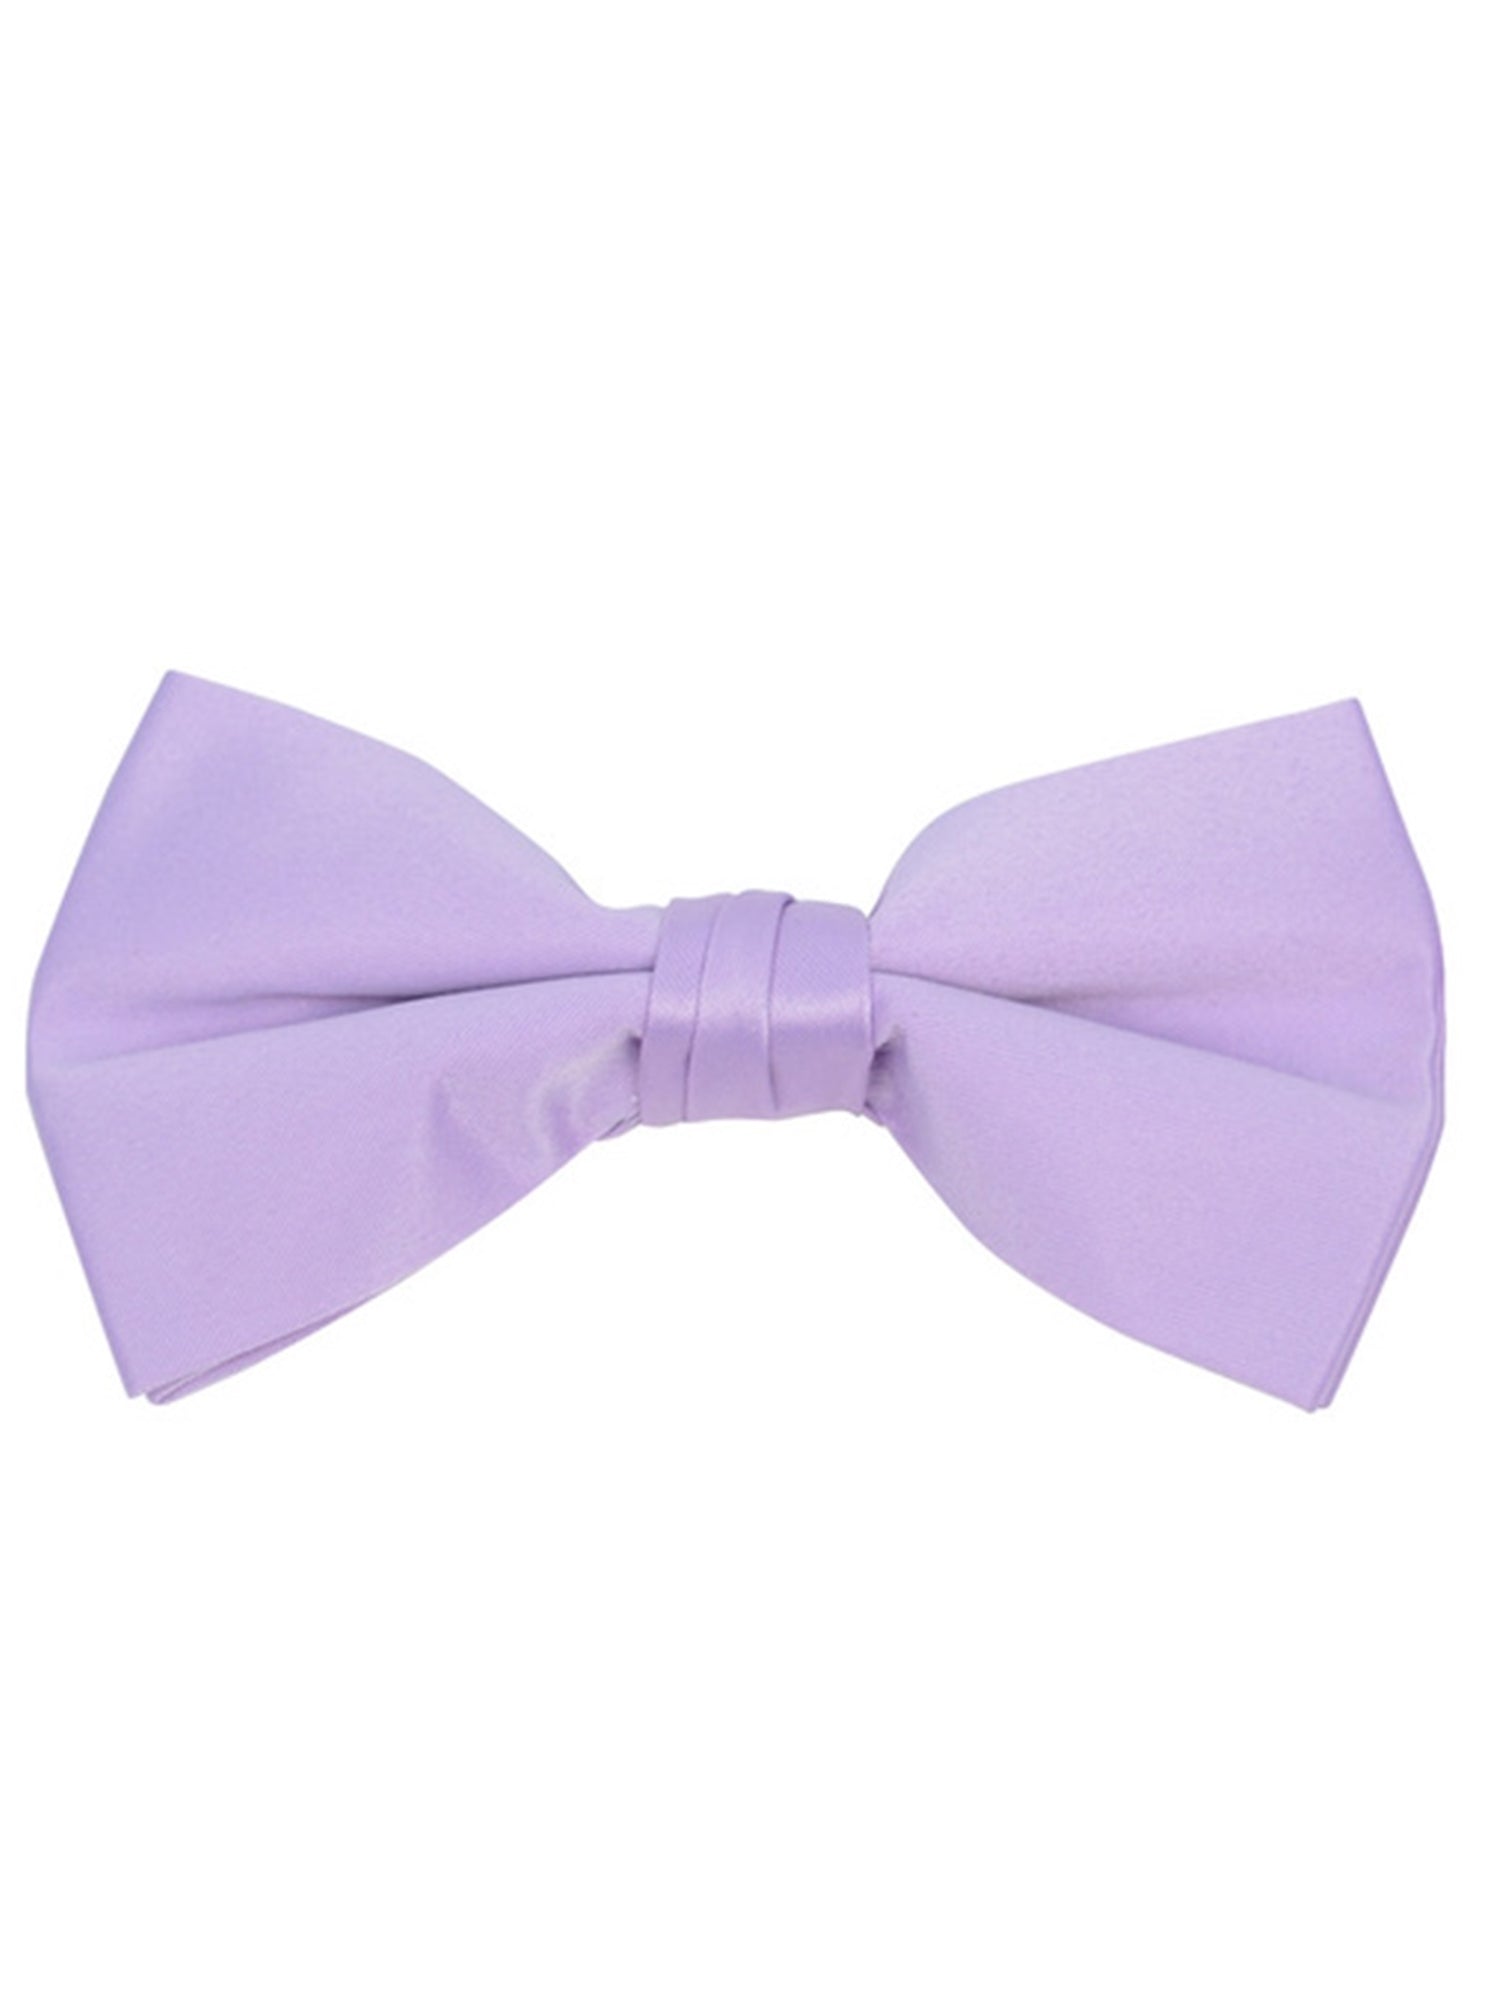 Men's Pre-tied Adjustable Length Bow Tie - Formal Tuxedo Solid Color Men's Solid Color Bow Tie TheDapperTie Lavender One Size 